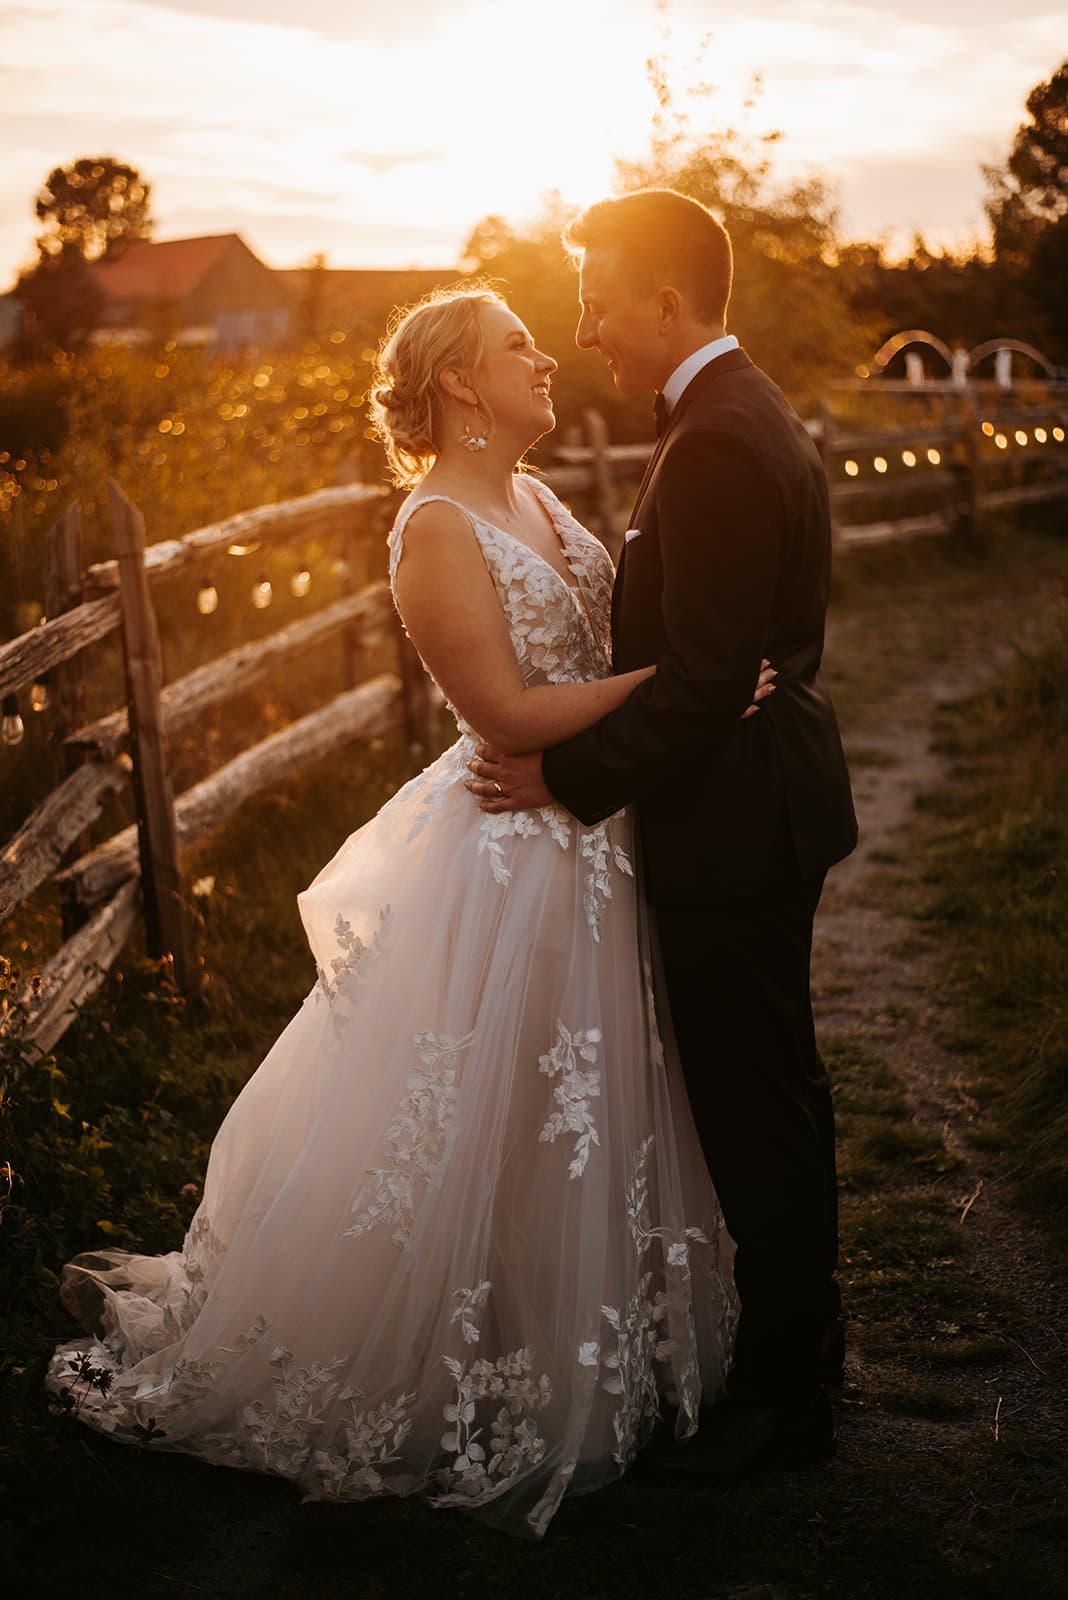 Cherryvale Weddings: Katie and Stefan's Gorgeous September Wedding